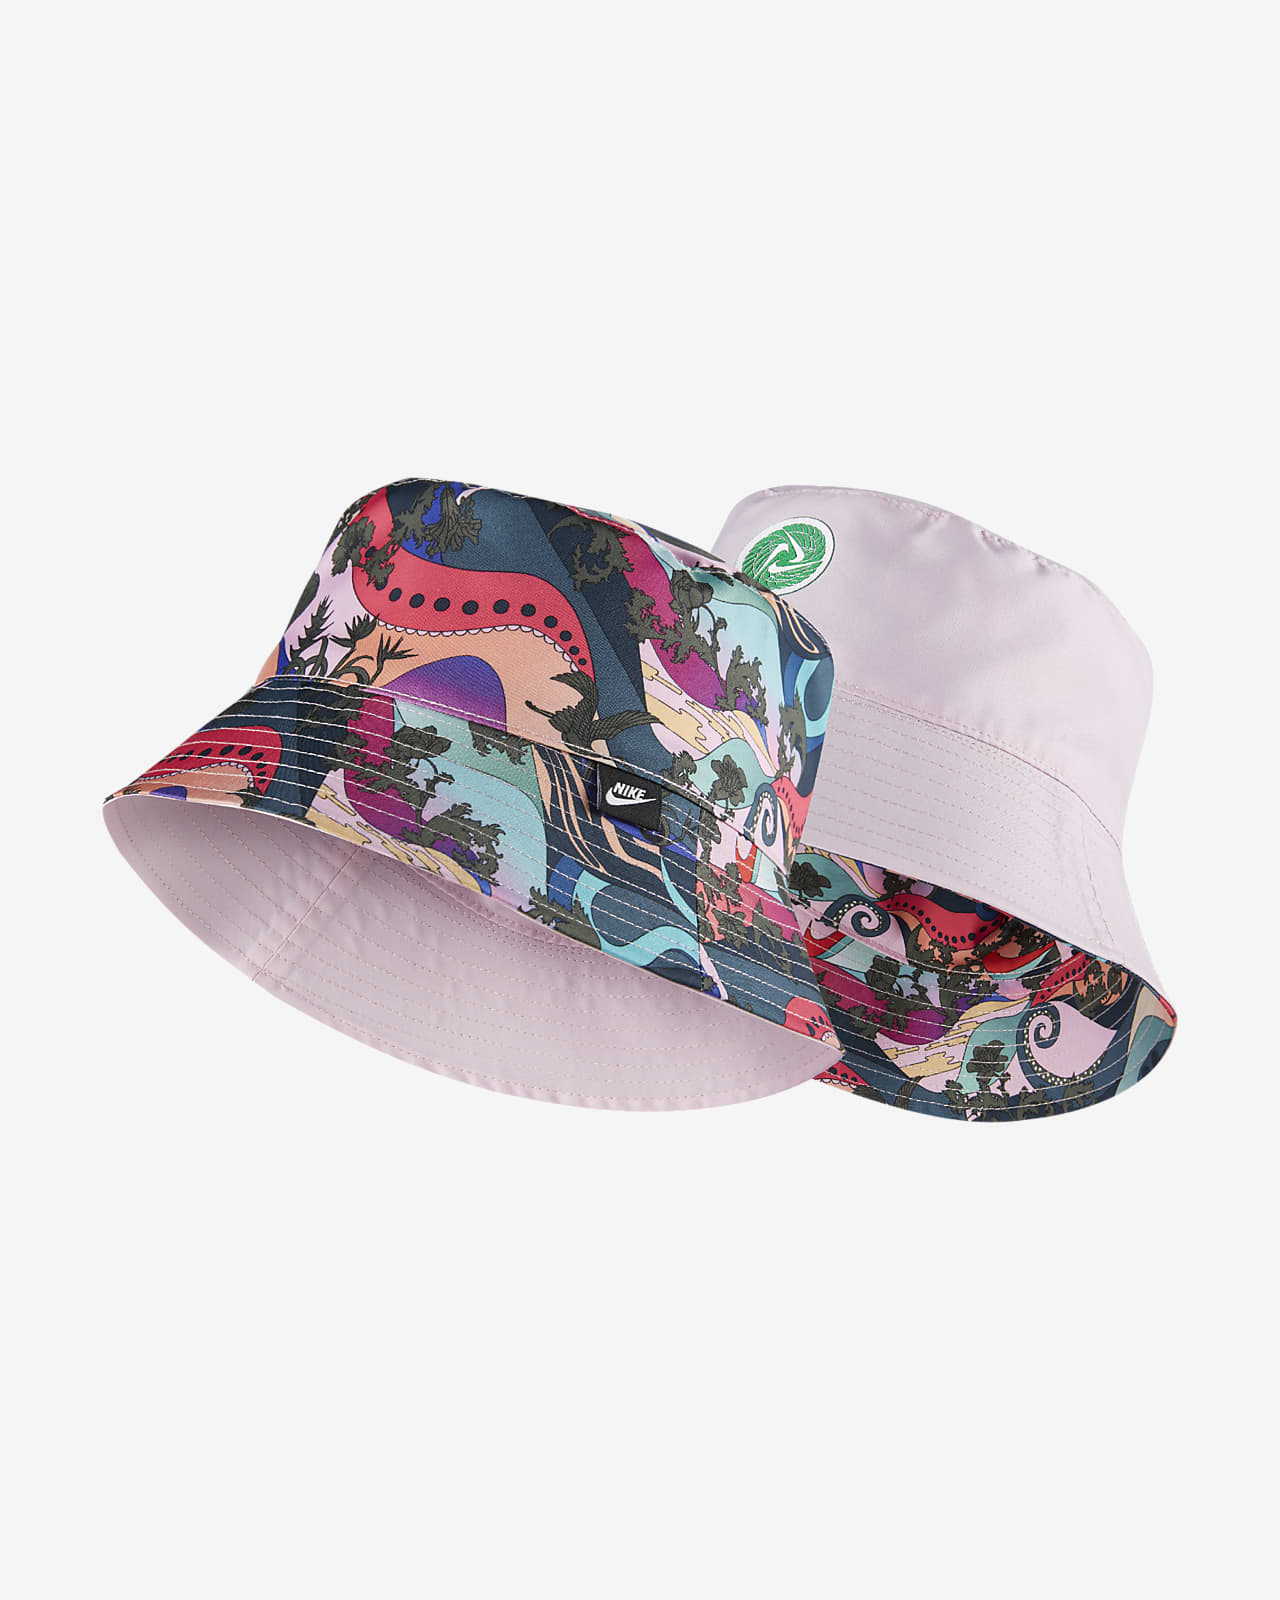 pink bucket hat nike